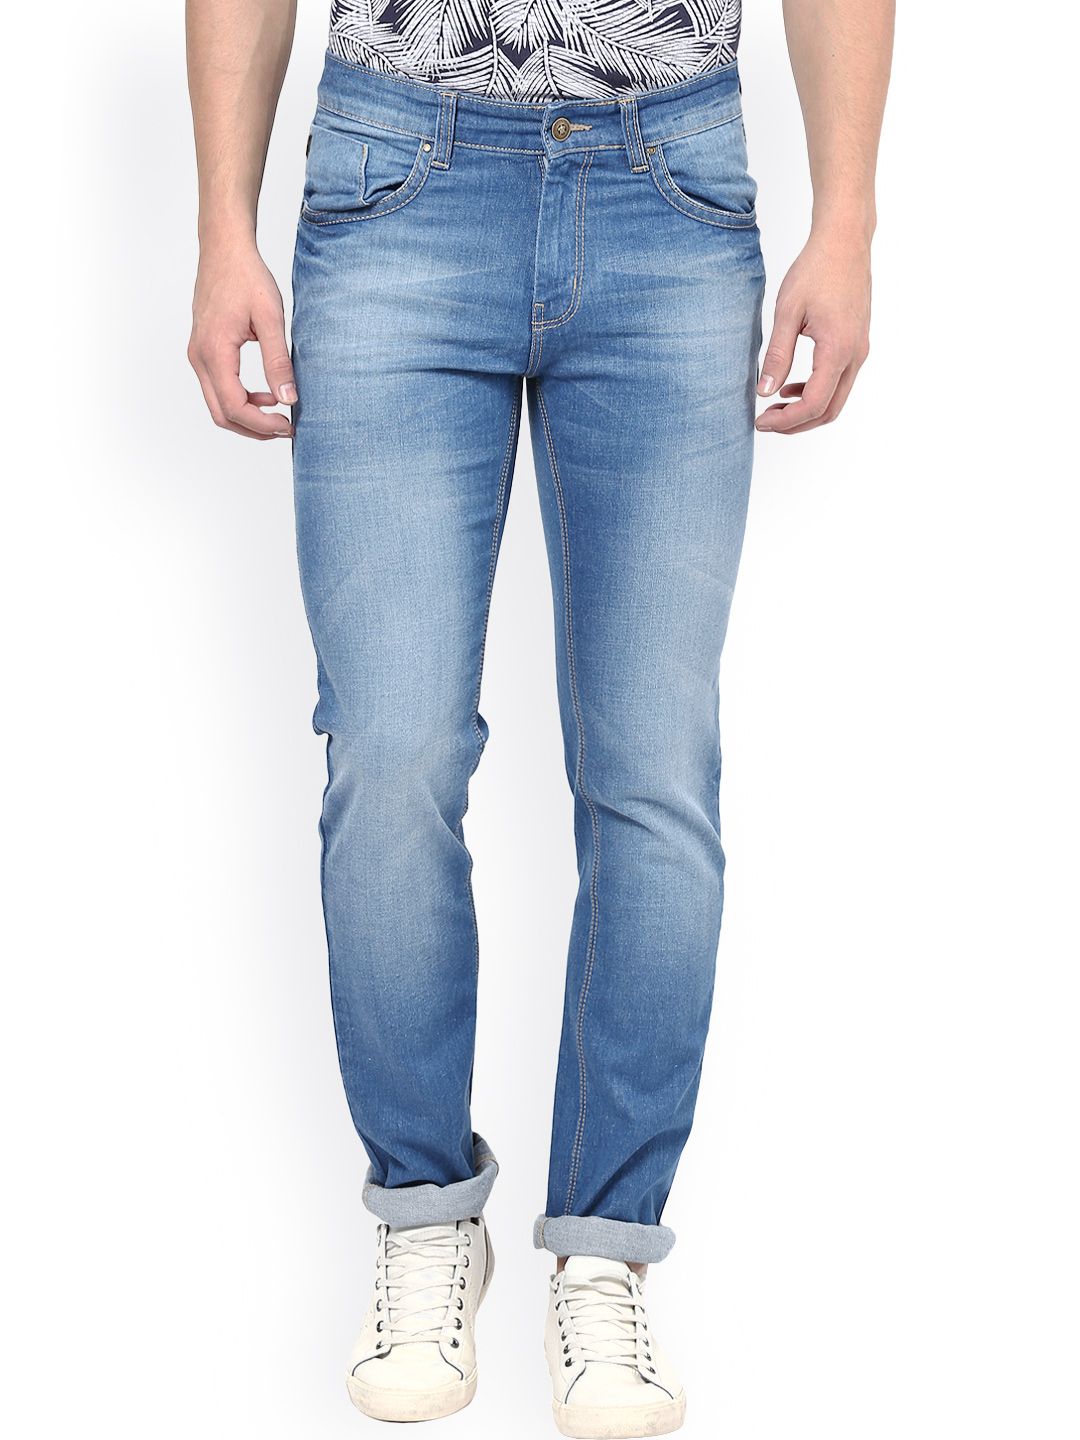 Buy Turtle Blue Slim Jeans - Apparel for Men